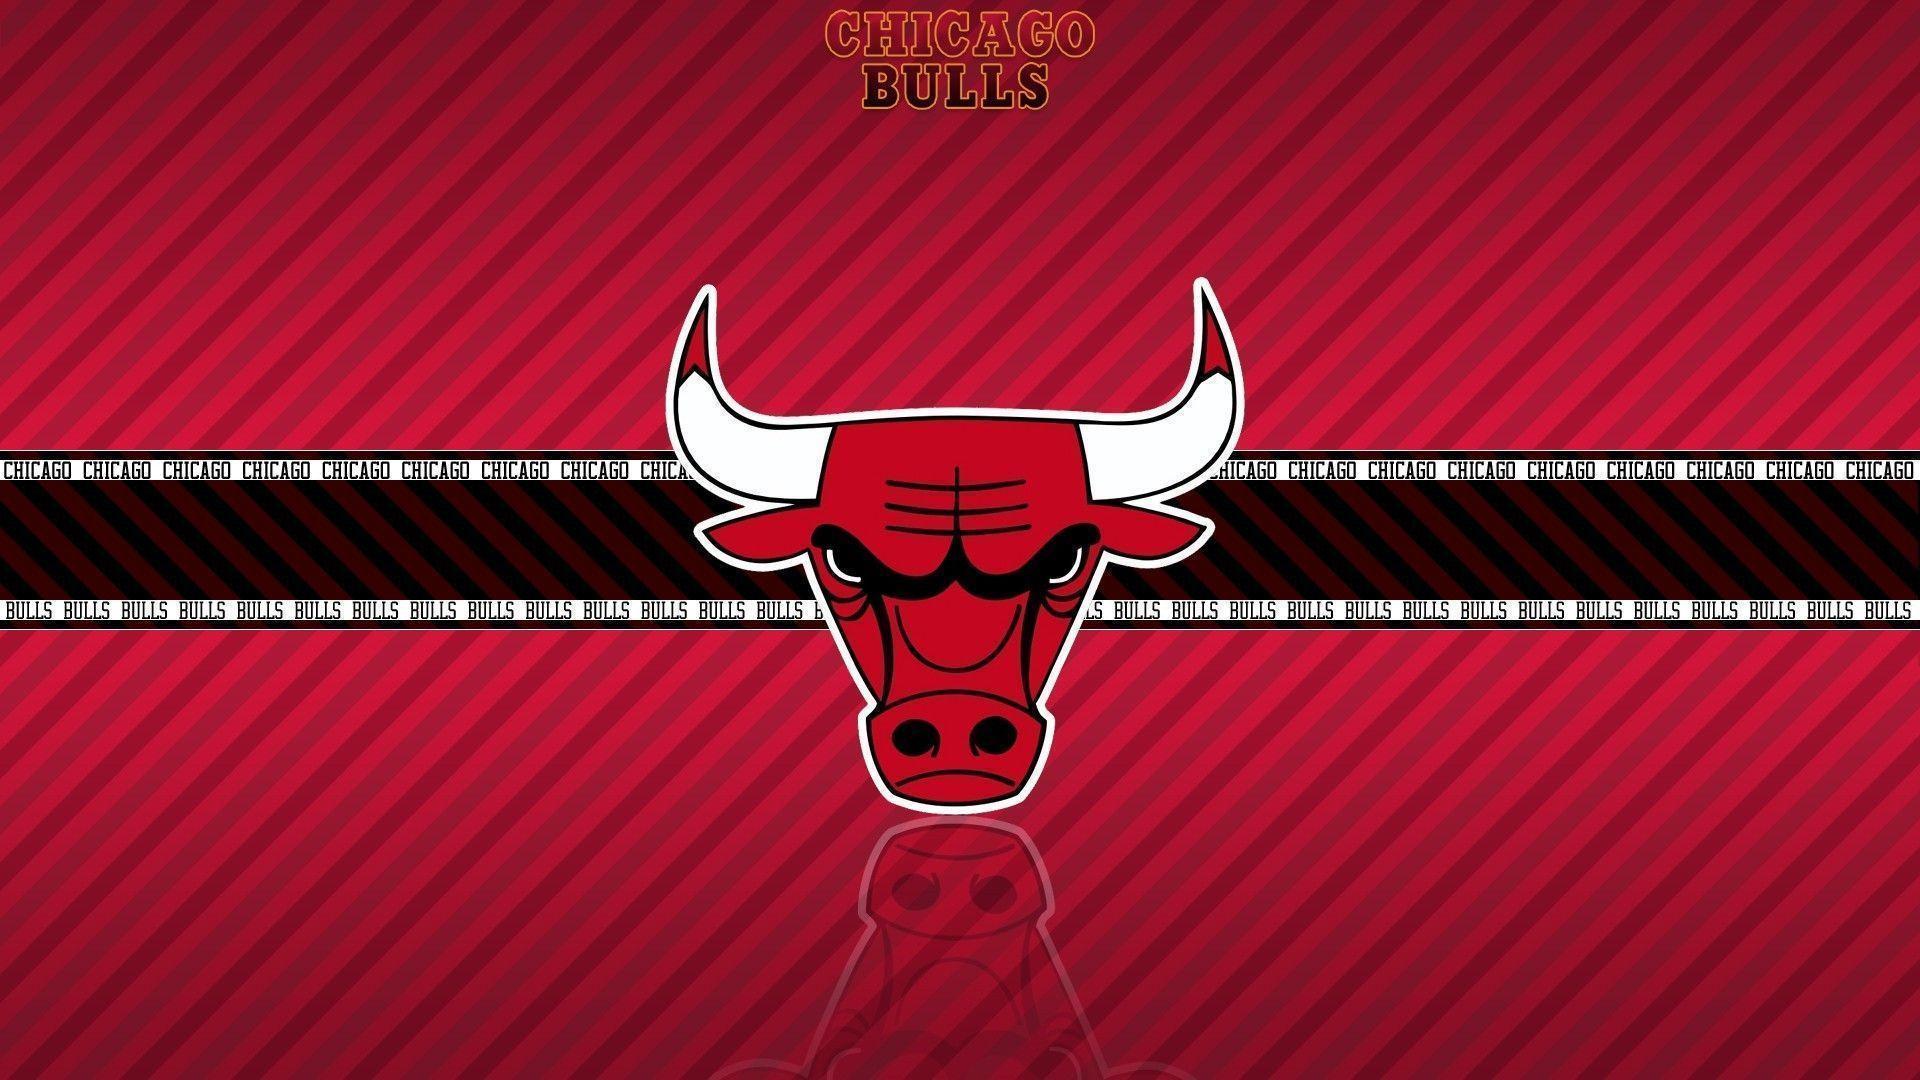 Bulls Wallpaper: Hdscreen Chicago Bulls Nba Desktop Wallpapers